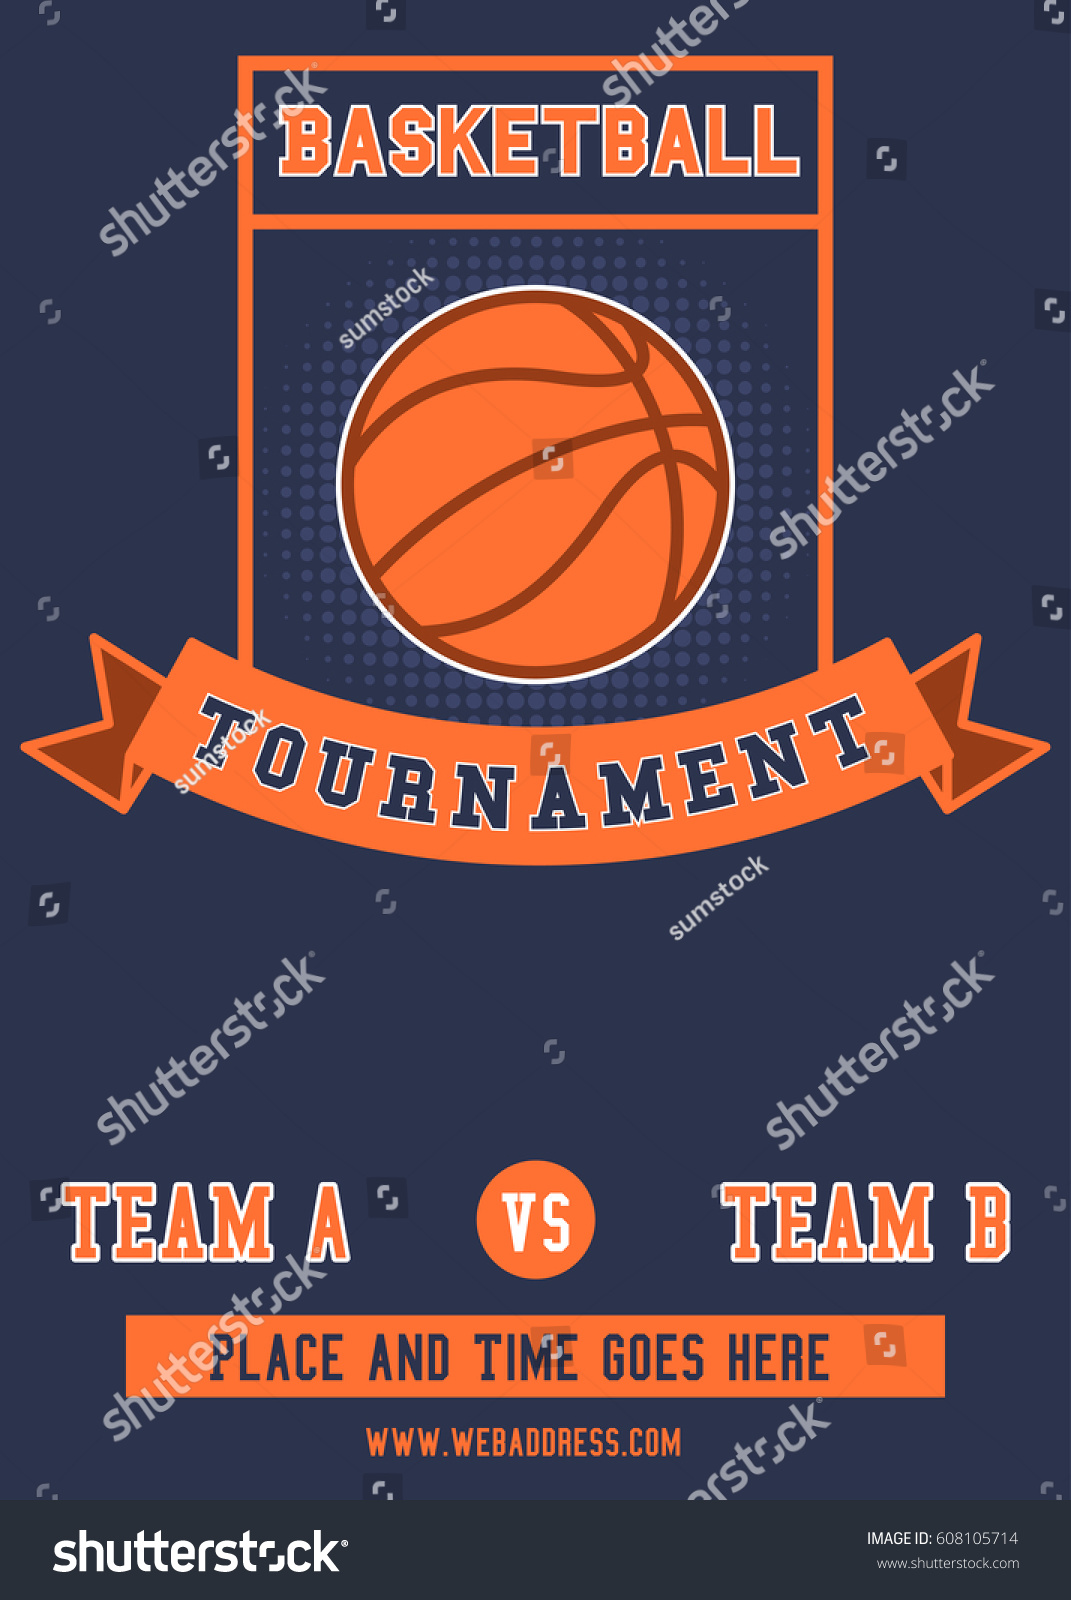 Basketball Tournament Flyer Template from image.shutterstock.com